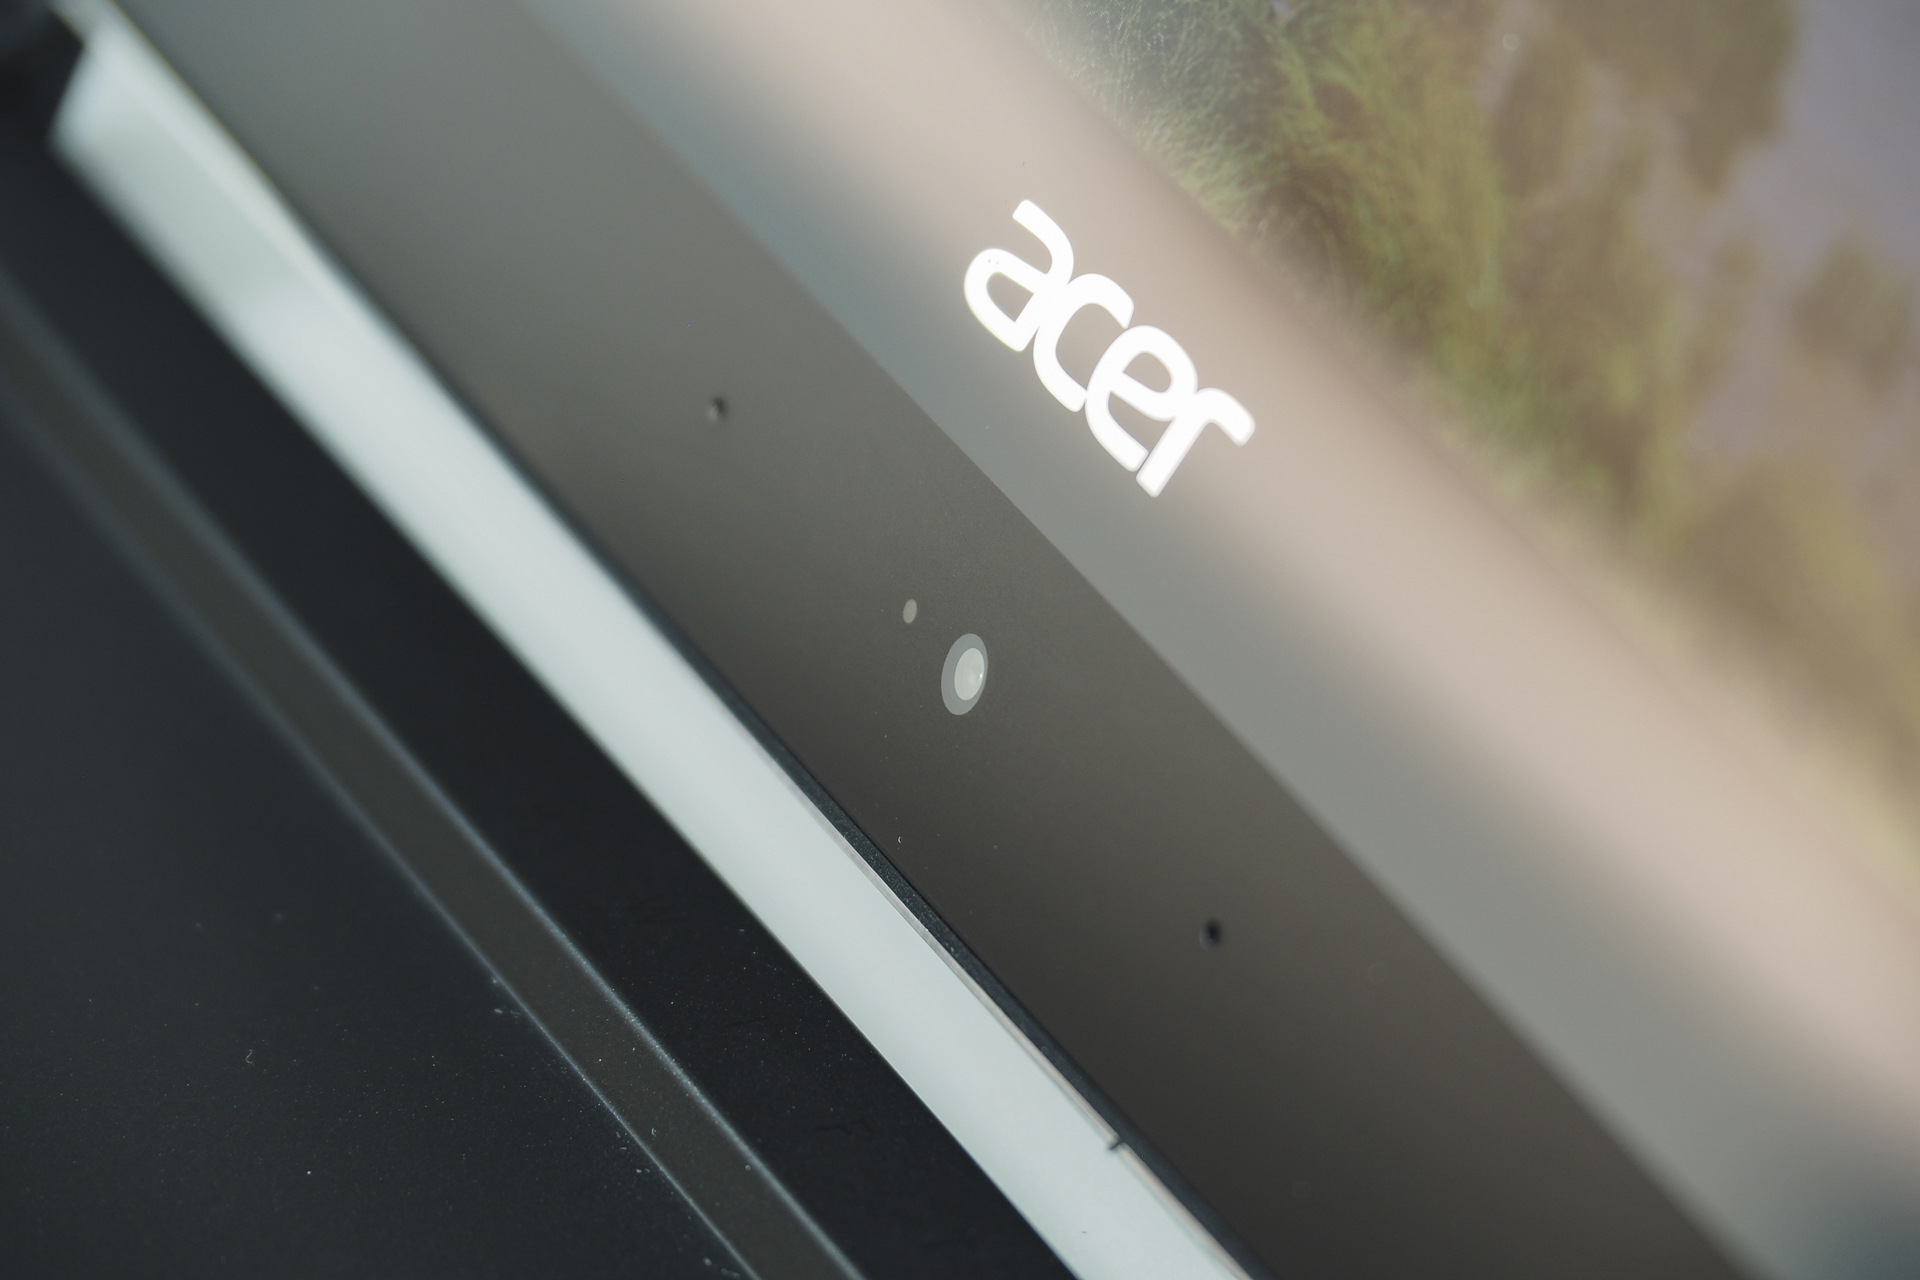 Acer Swift 7 Impressions